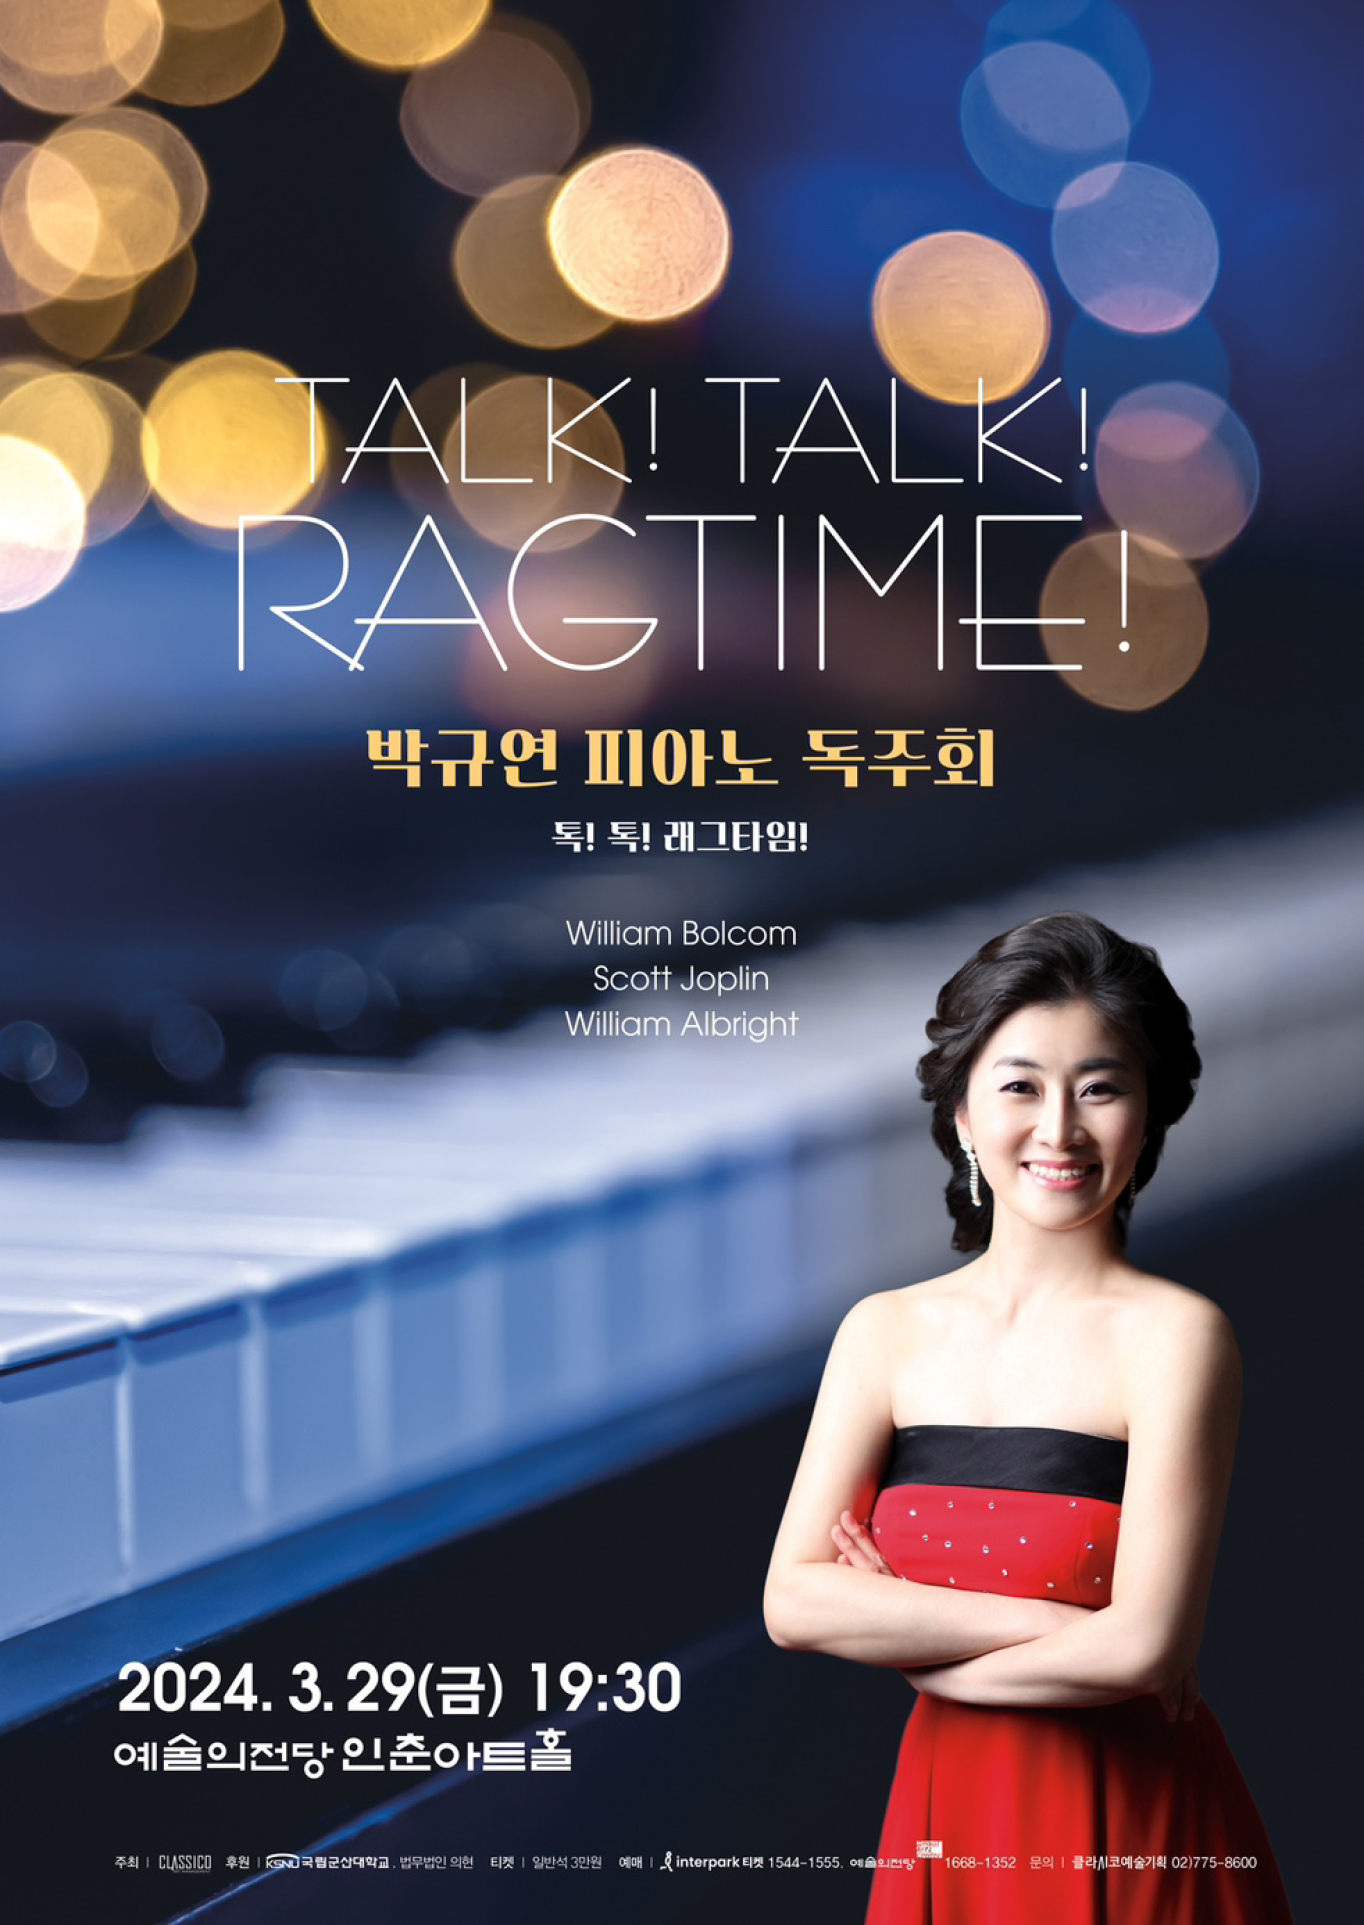 ‘Talk! Talk! Ragtime!’박규연 피아노 독주회 개최 대표이미지